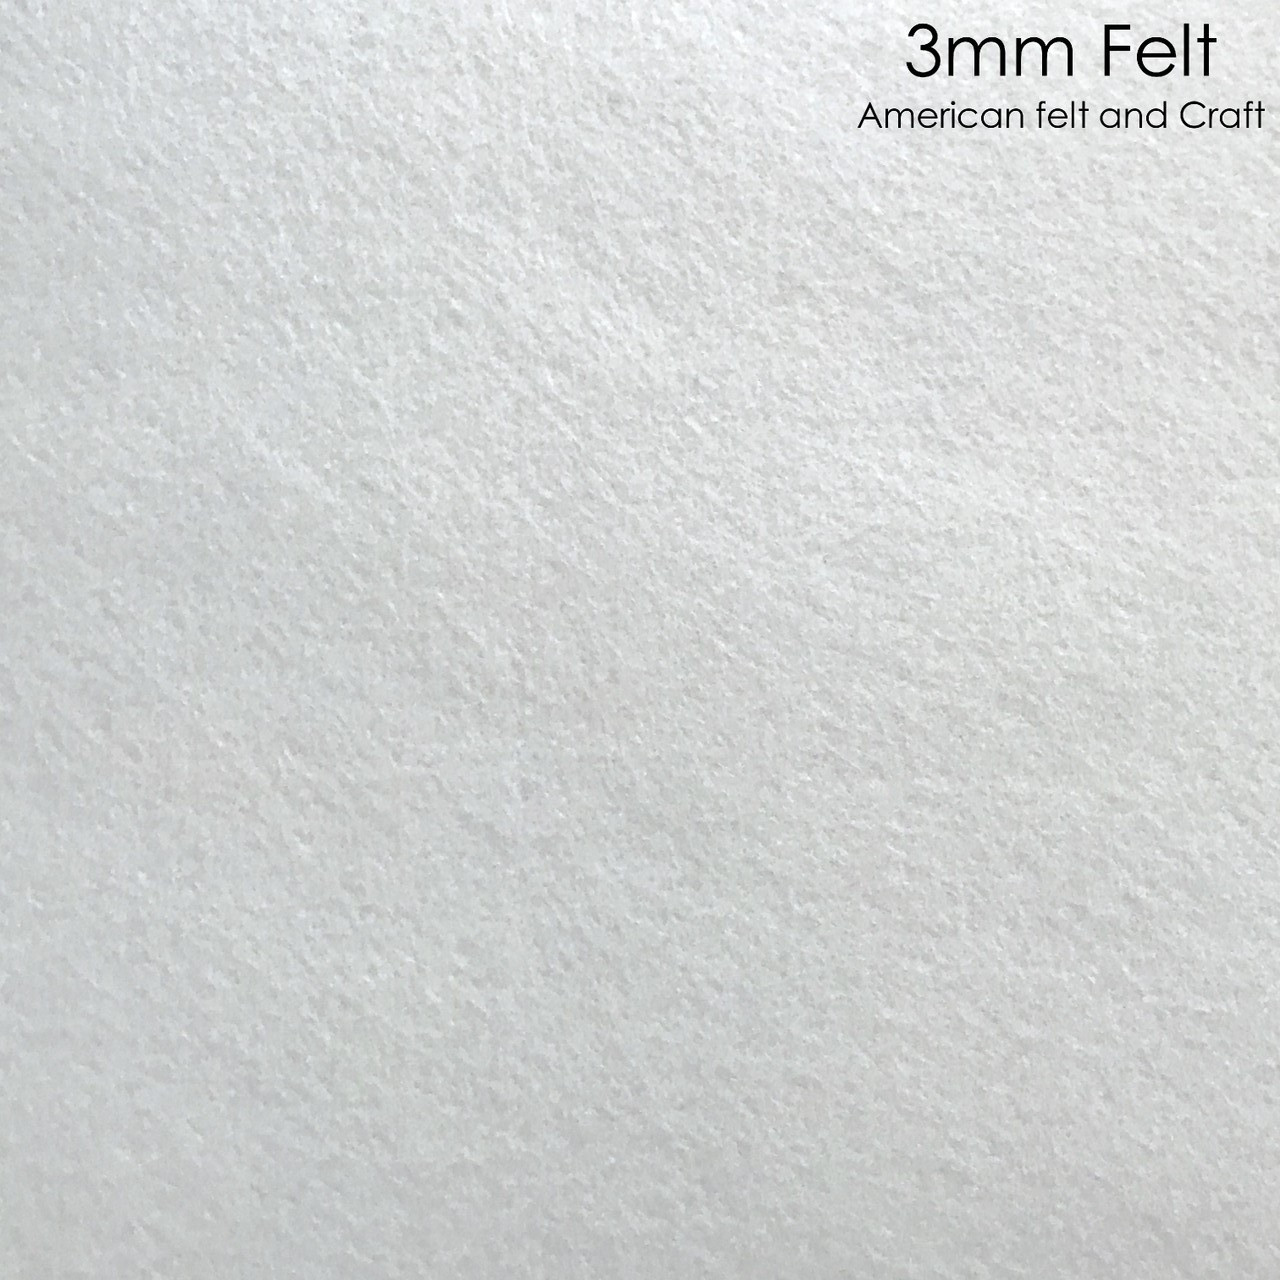 Off White - 3mm thick felt sheet - American Felt & Craft